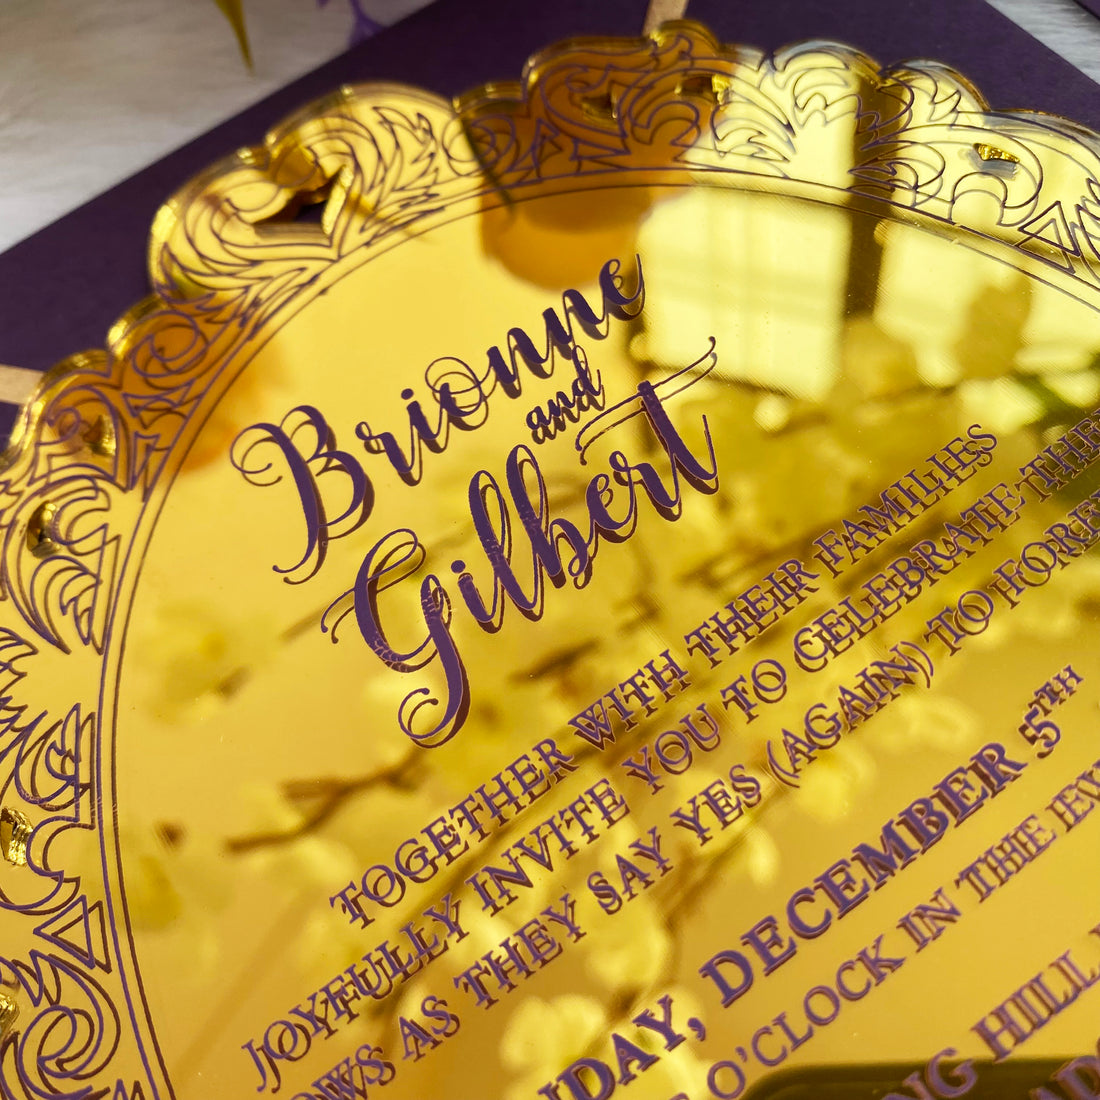 Gold Foil Printed Acrylic Wedding Invitation with Black Envelope, Eleg –  World of Wedding Co.